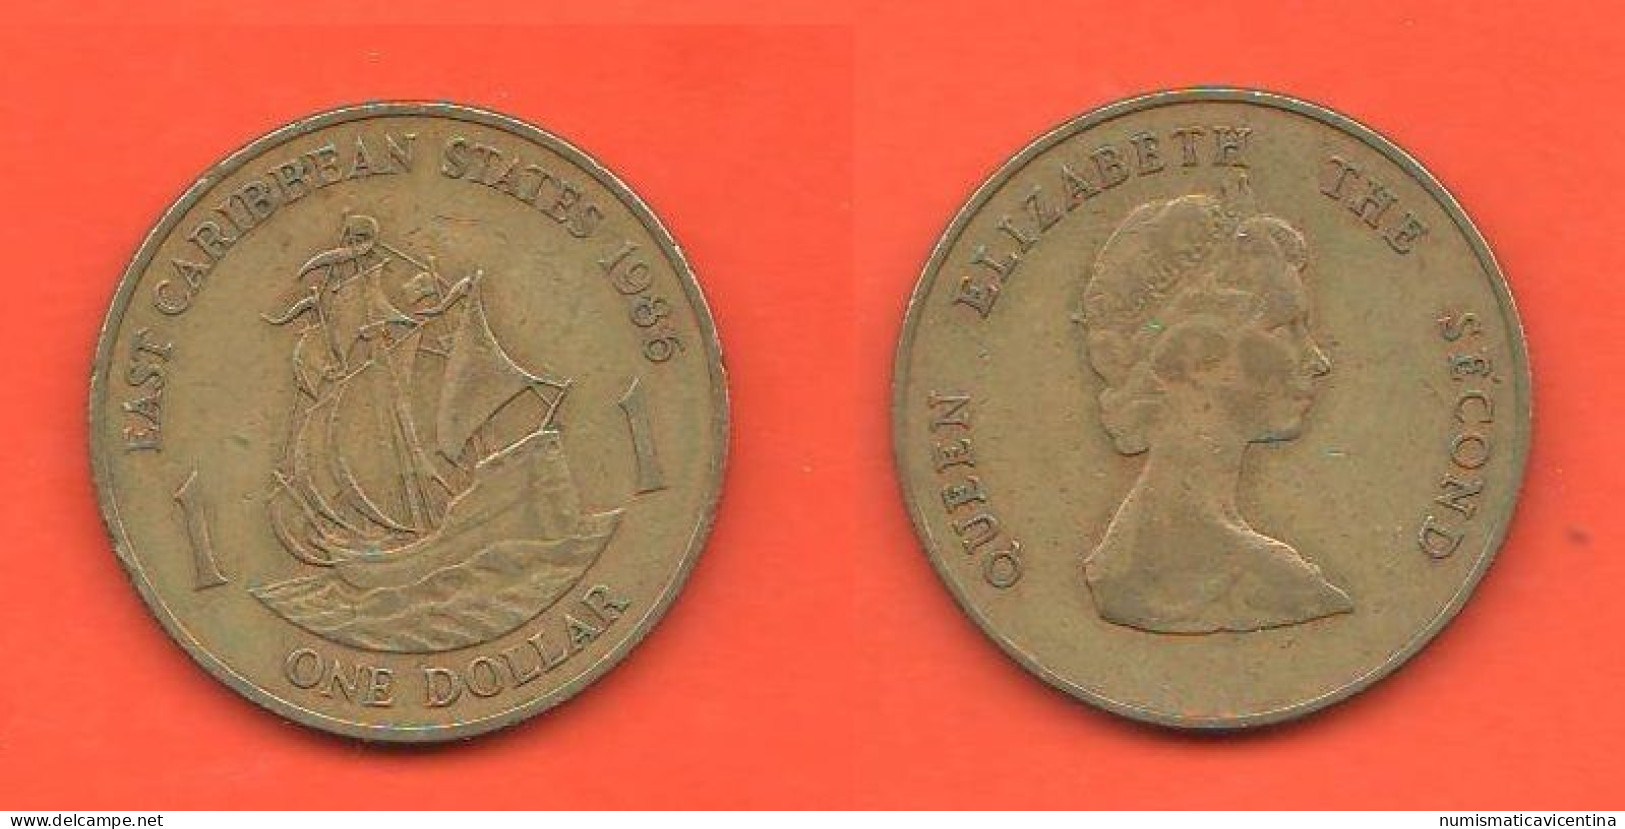 Caraibi 1 One Dollar 1986 Carribean States Bronze Coin Britanniques D'outre-mer C 7 - Britse-karibisher Territorien